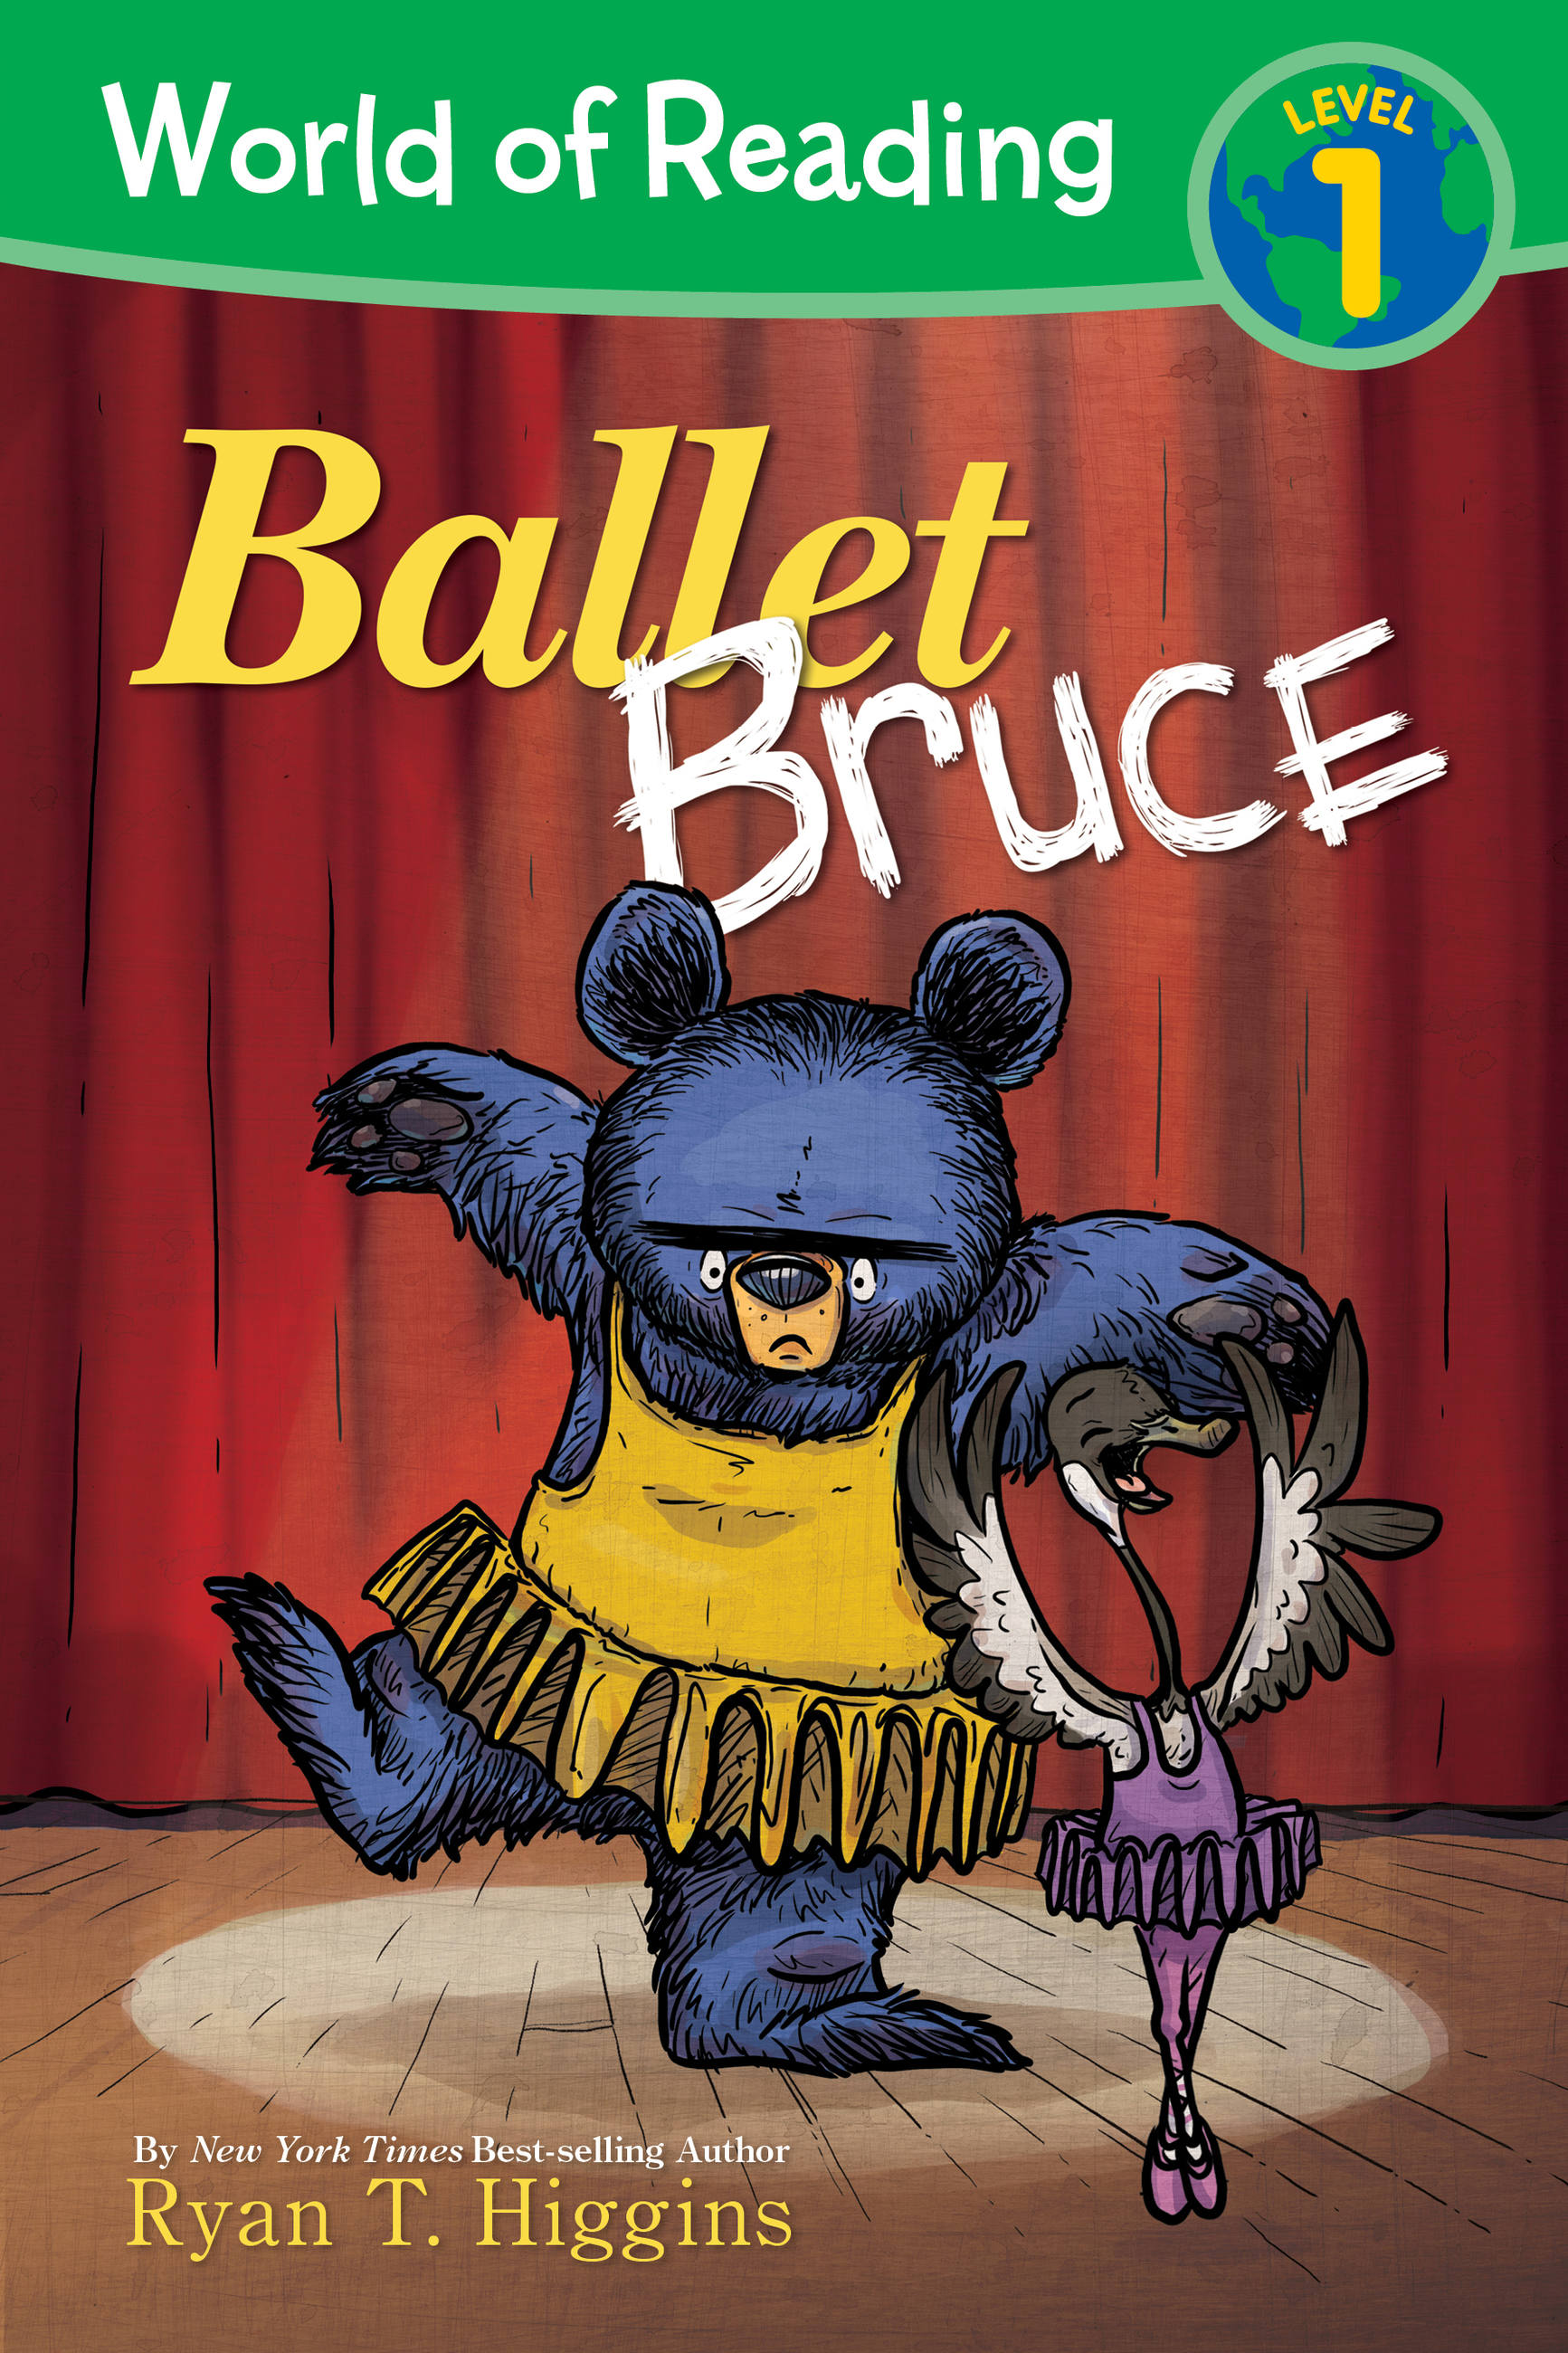 World of Reading - Mother Bruce Ballet Bruce : Level 1 | First reader